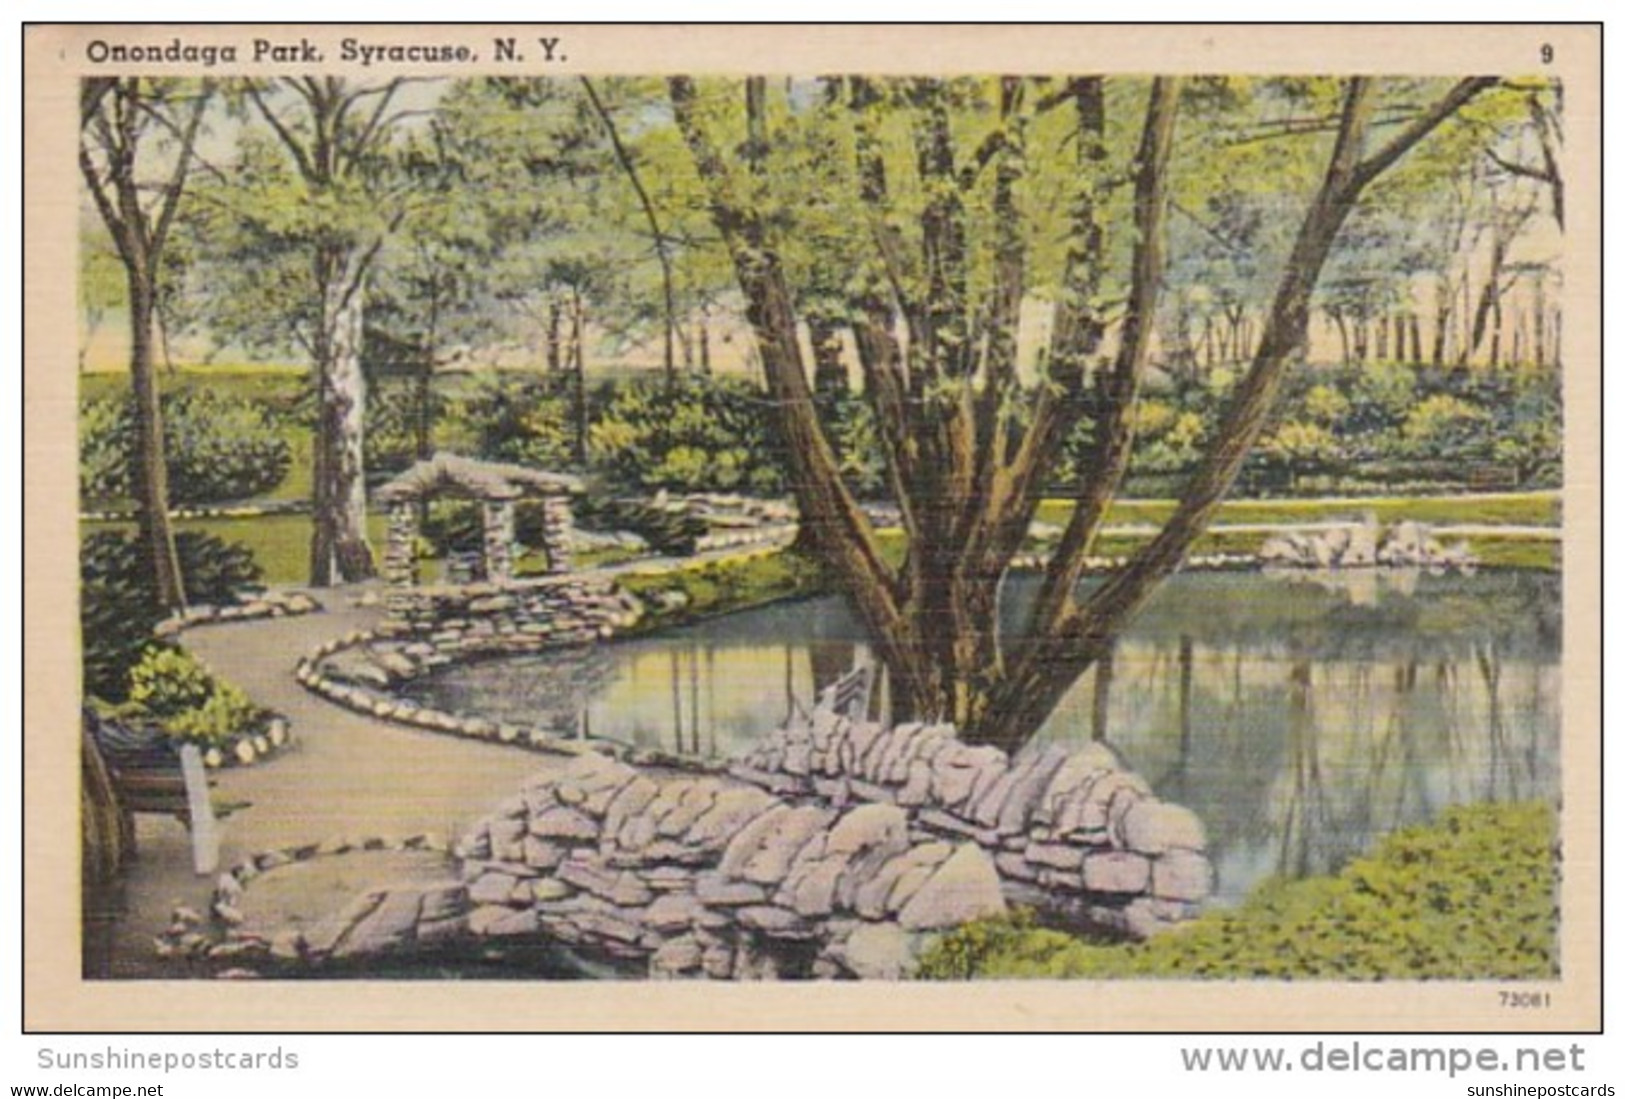 New York Syracuse Scene In Onondaga Park 1940 - Syracuse